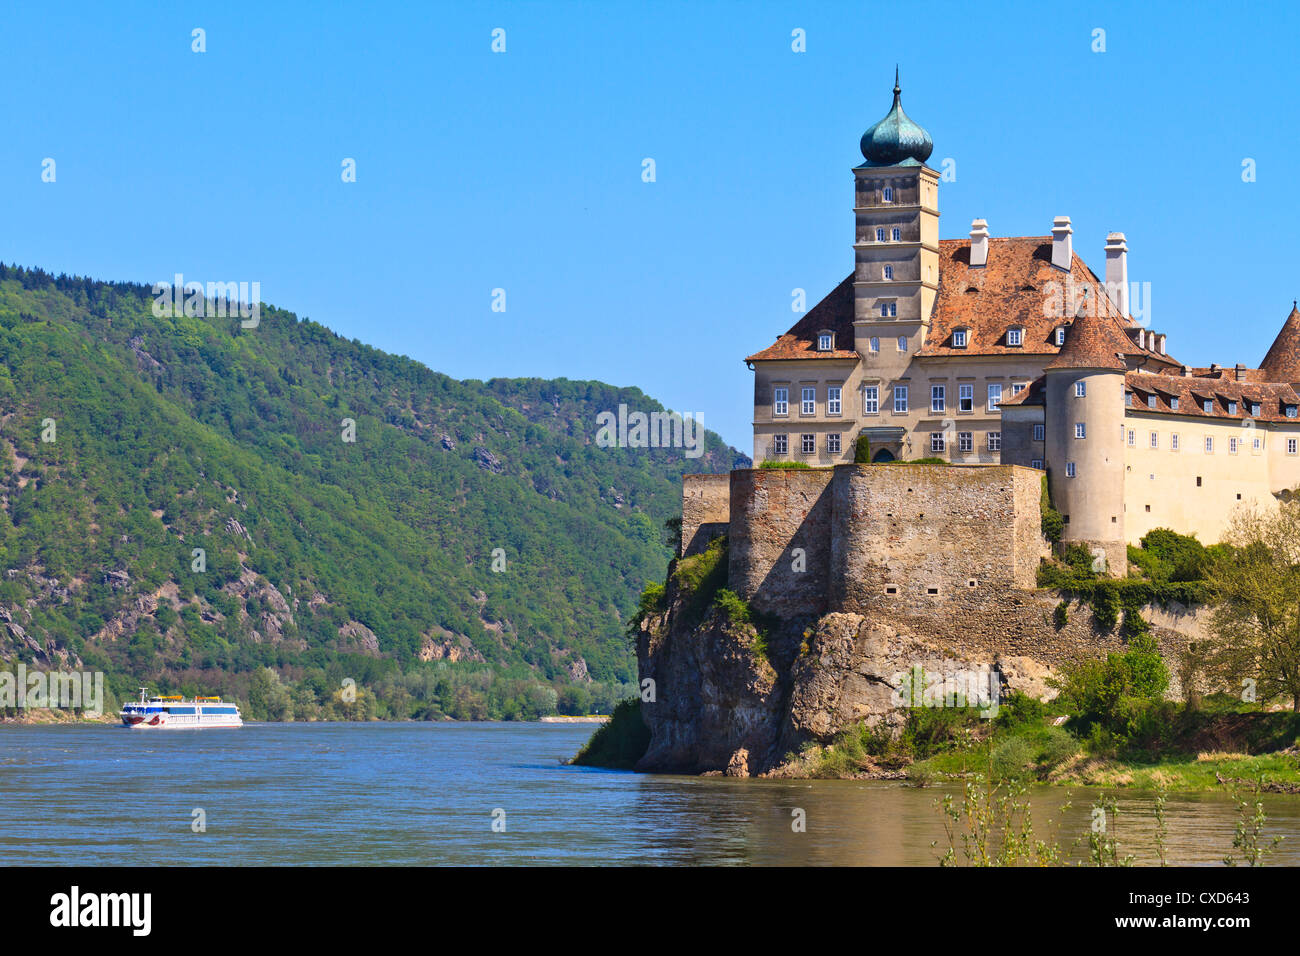 Schonbuhel Castle on the Danube river, Wachau Valley, Austria Stock Photo